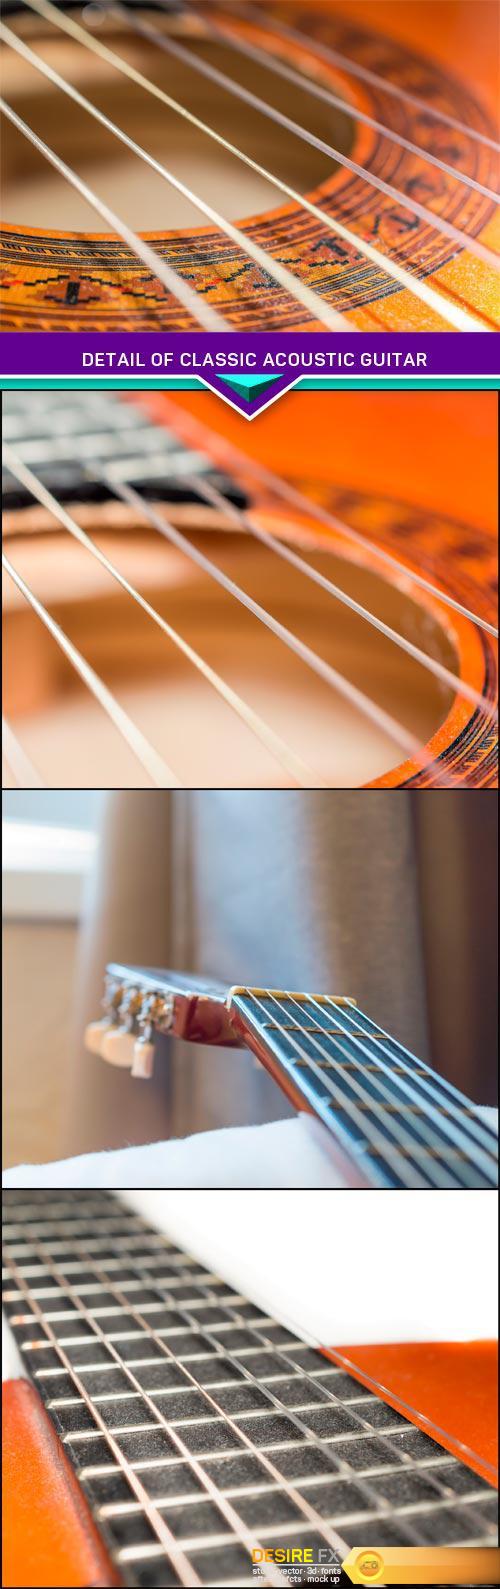 Detail of classic acoustic guitar 4X JPEG